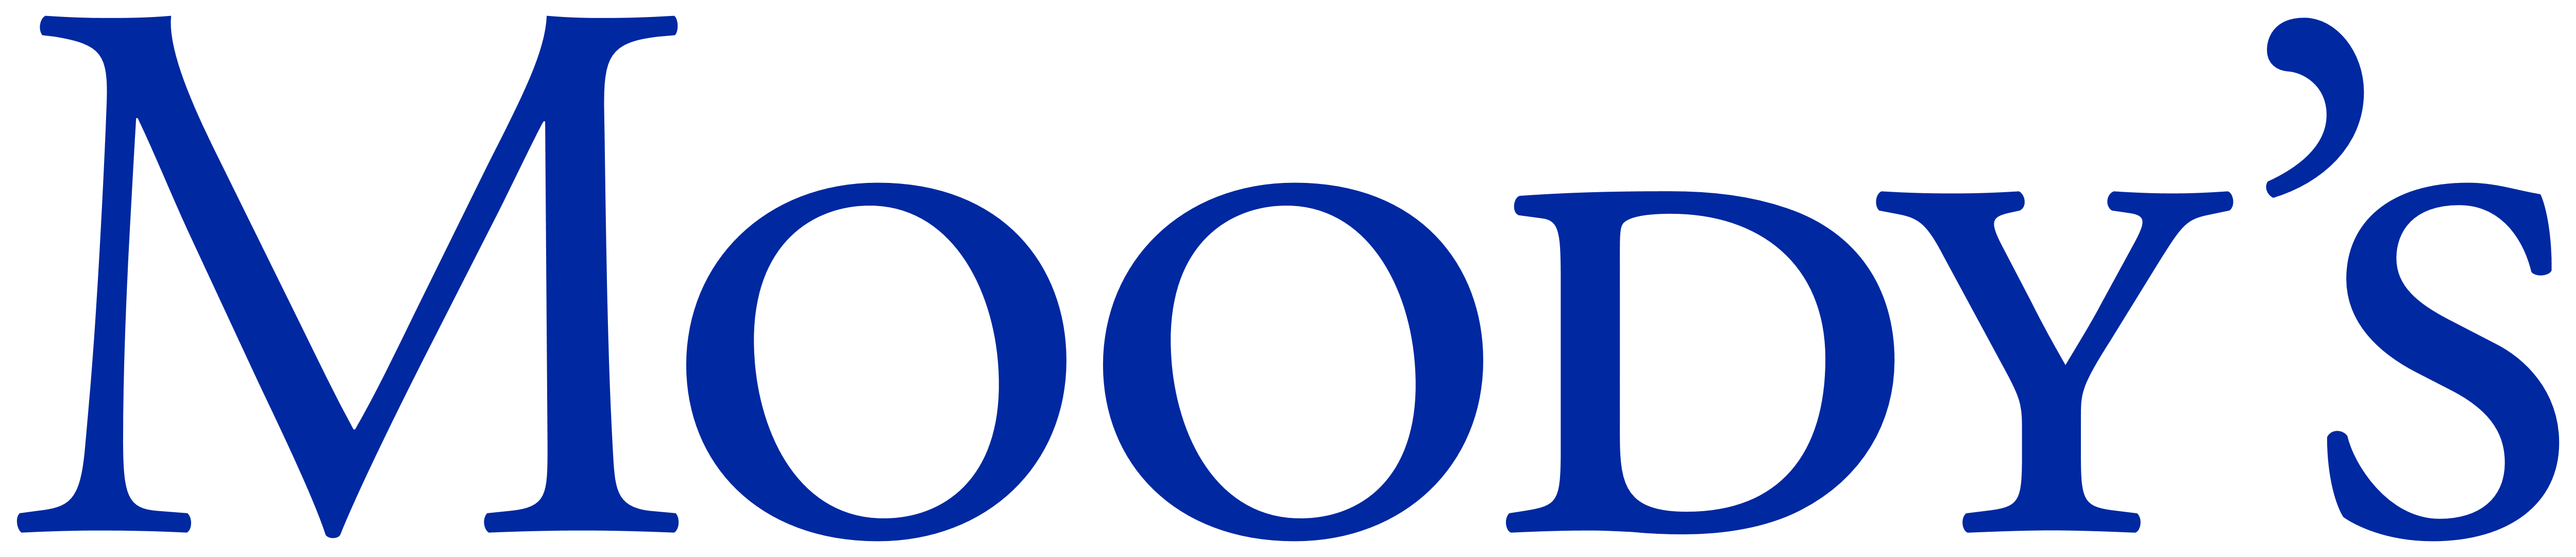 Moody’s Logos Download